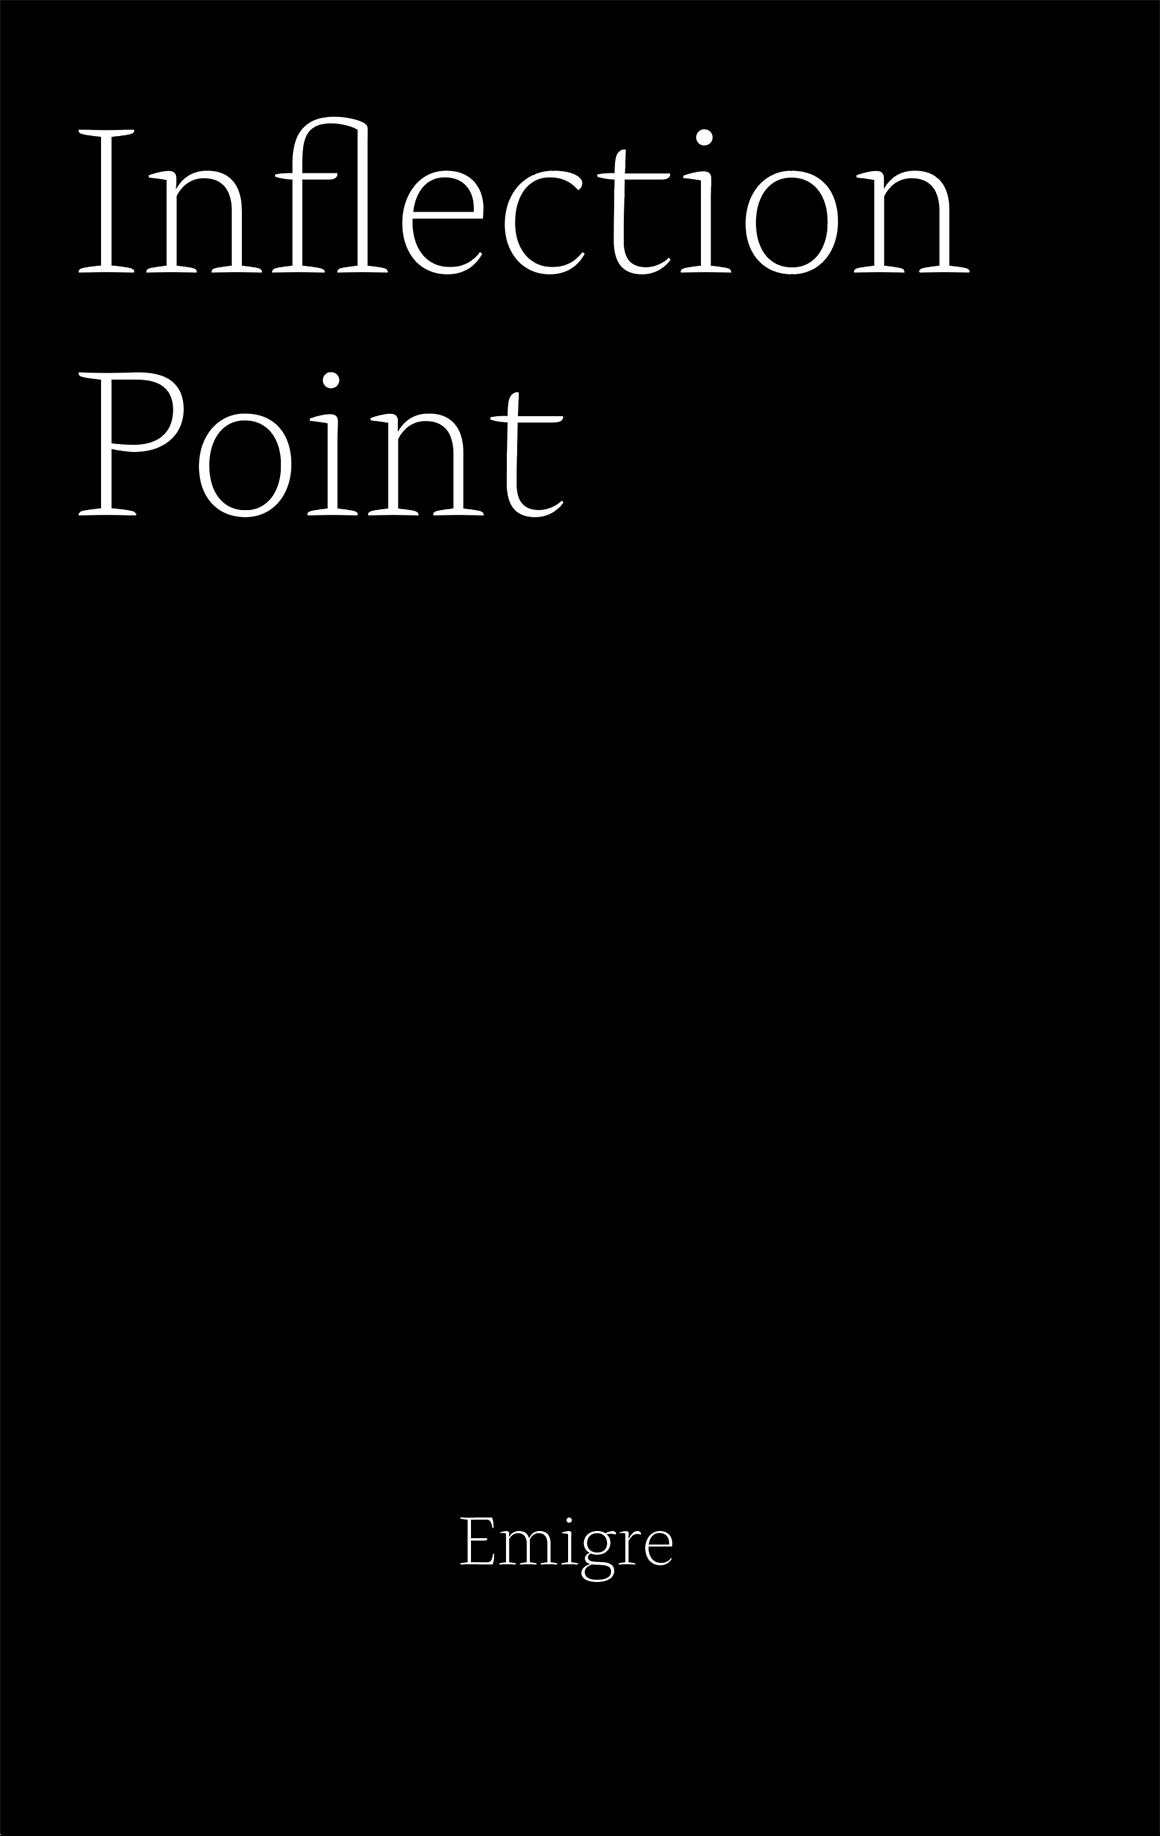 Inflection Point Font Specimen Catalog